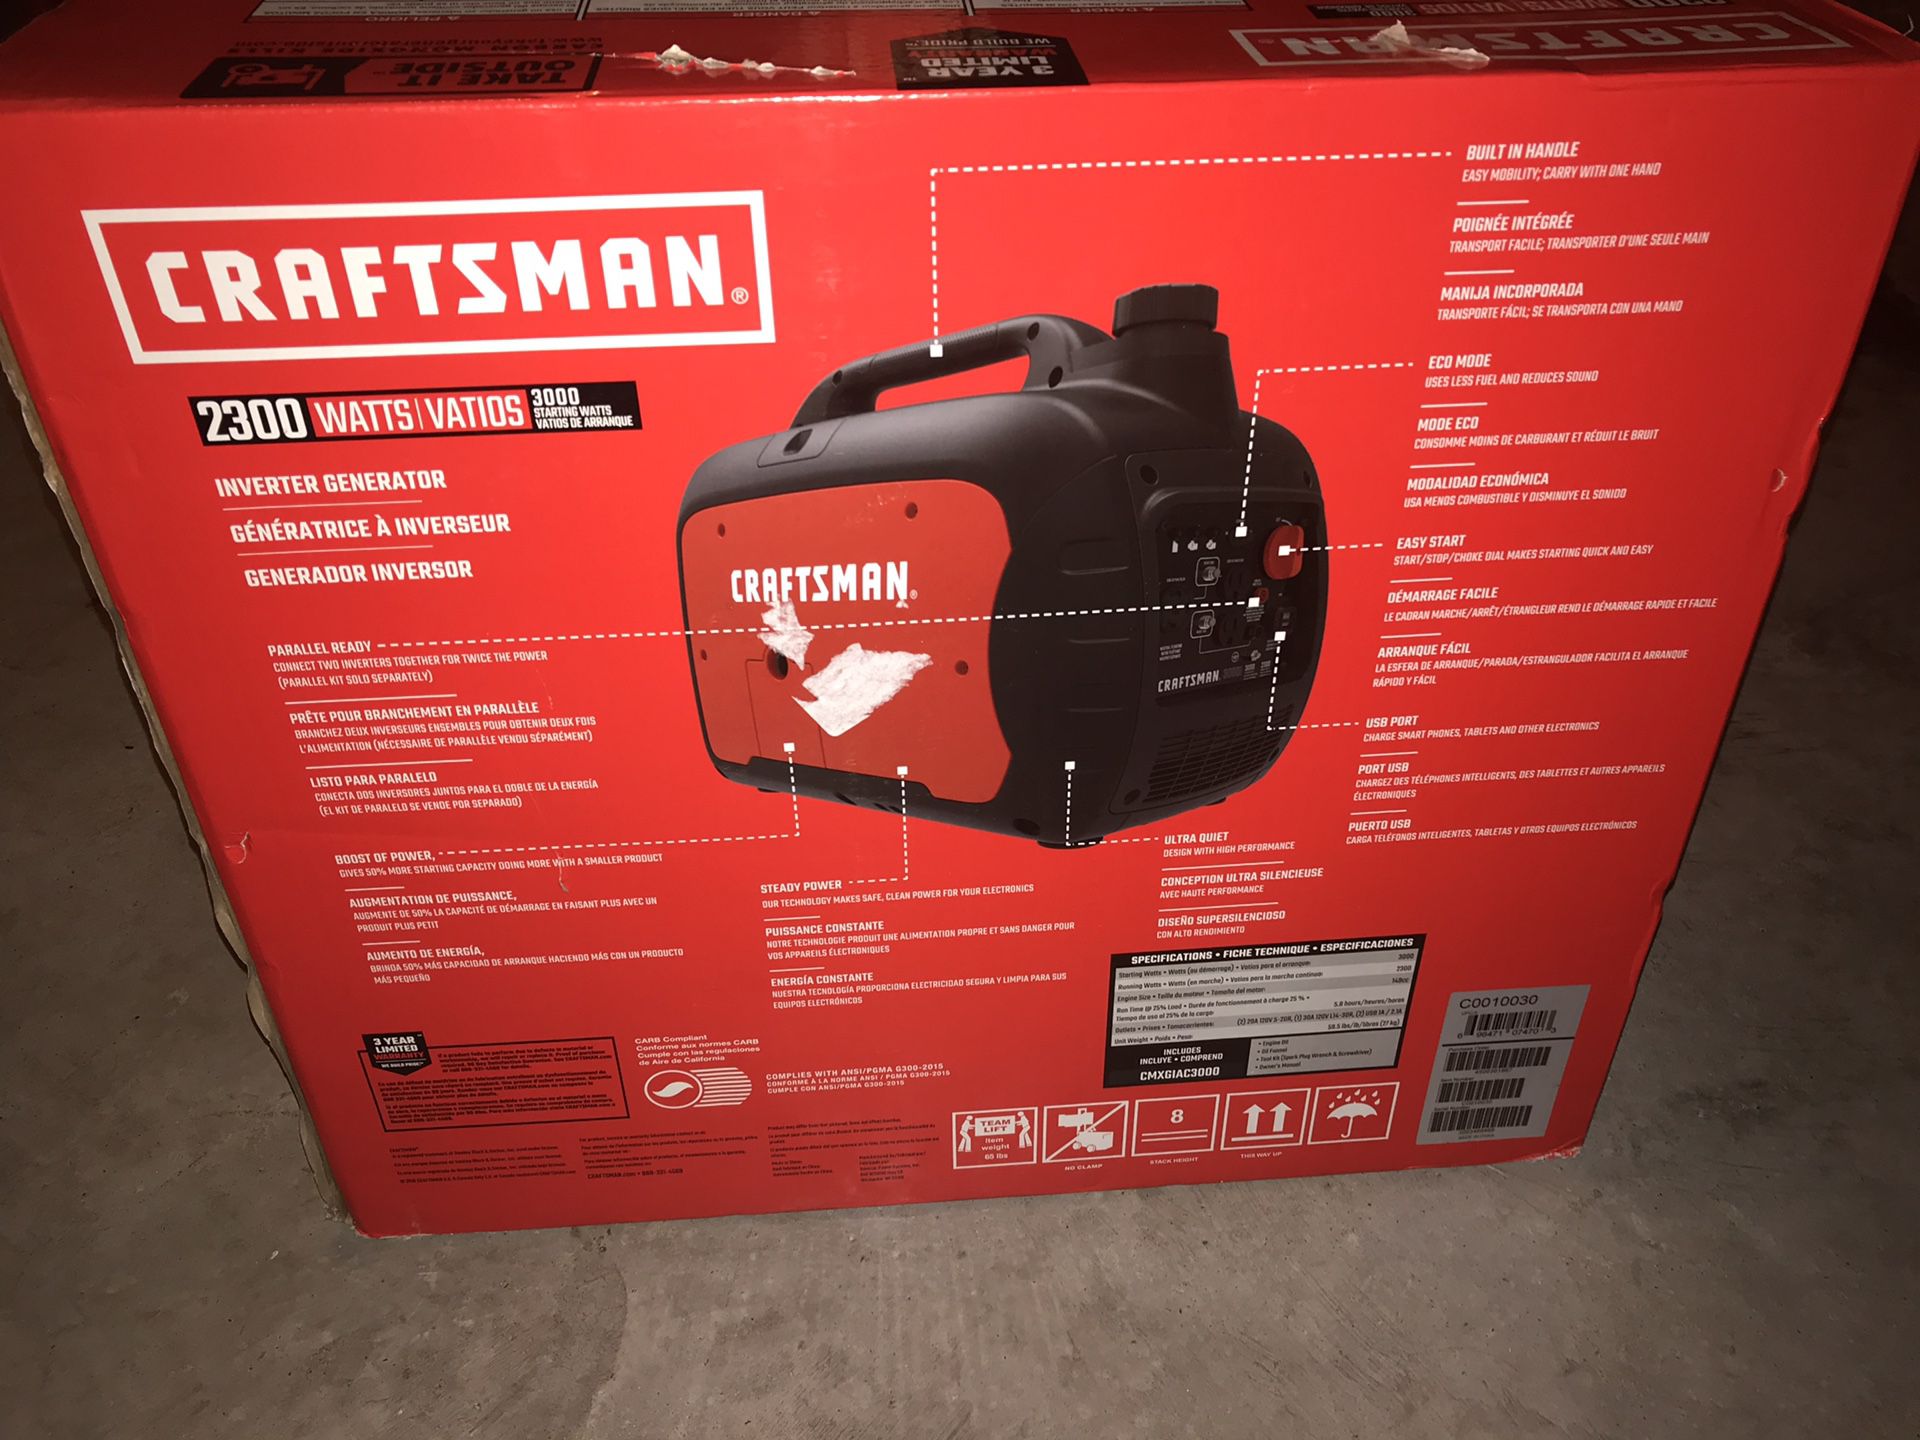 Craftsman Combo (FREE Tool): CRAFTSMAN 3000-Watt Gasoline Portable Generator inverter + FREE Craftsman 1/4-in. Mini-Ratchet Wrench Air tool